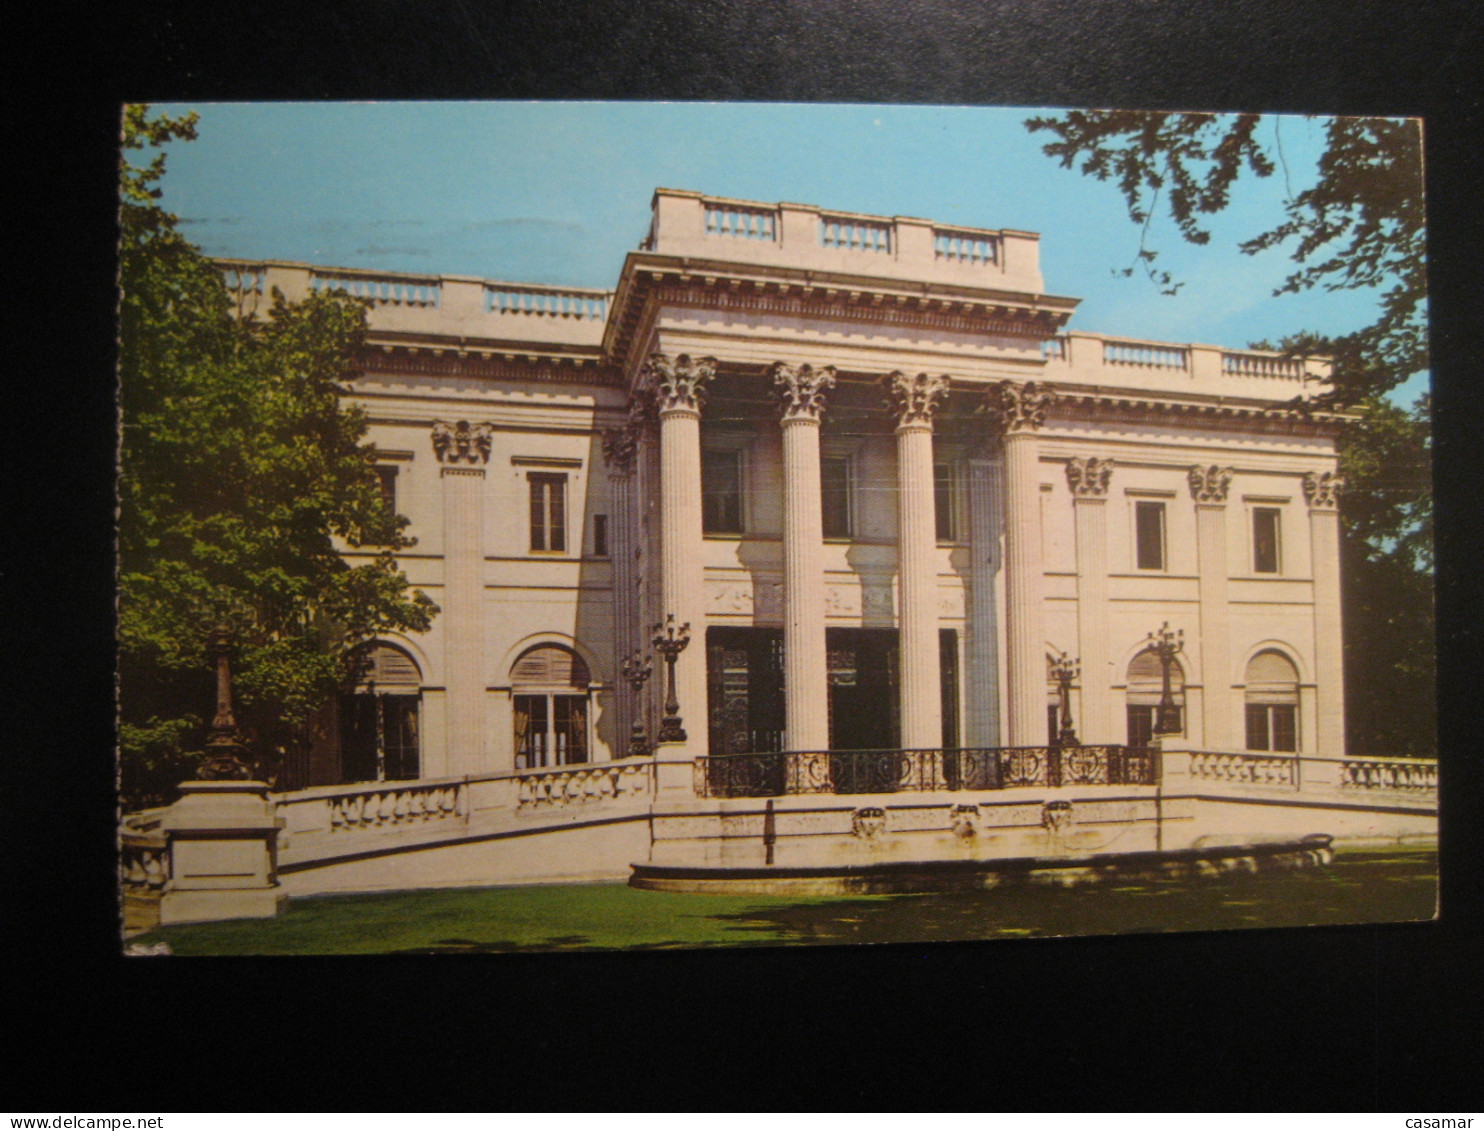 NEWPORT Rhode Island Marble House PROVINCETOWN Cancel 1974 To Ontario Canada Postcard USA - Newport